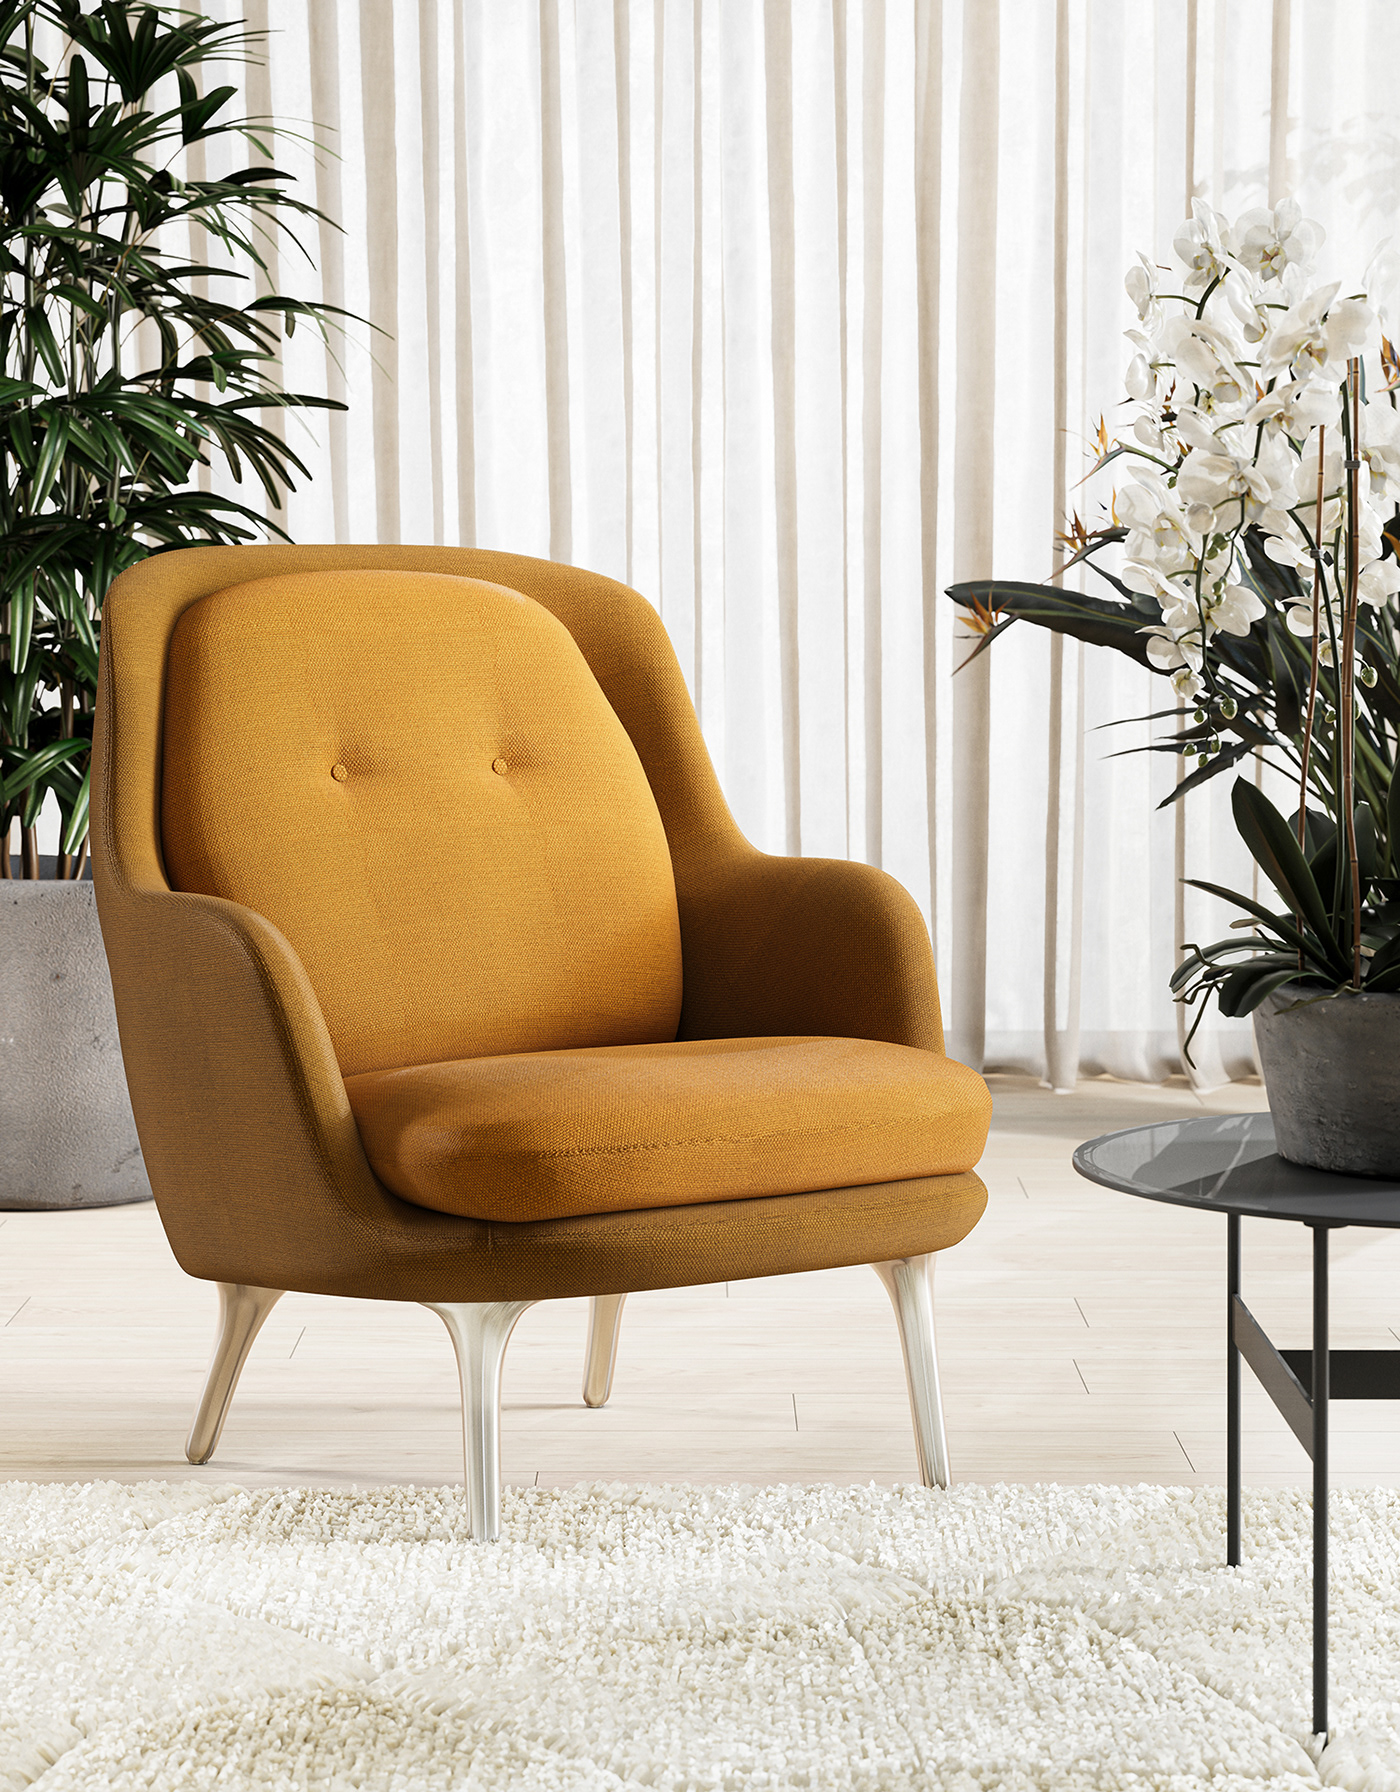 fritz hansen chair interior design  furniture photorealistic product product design  Product Rendering design